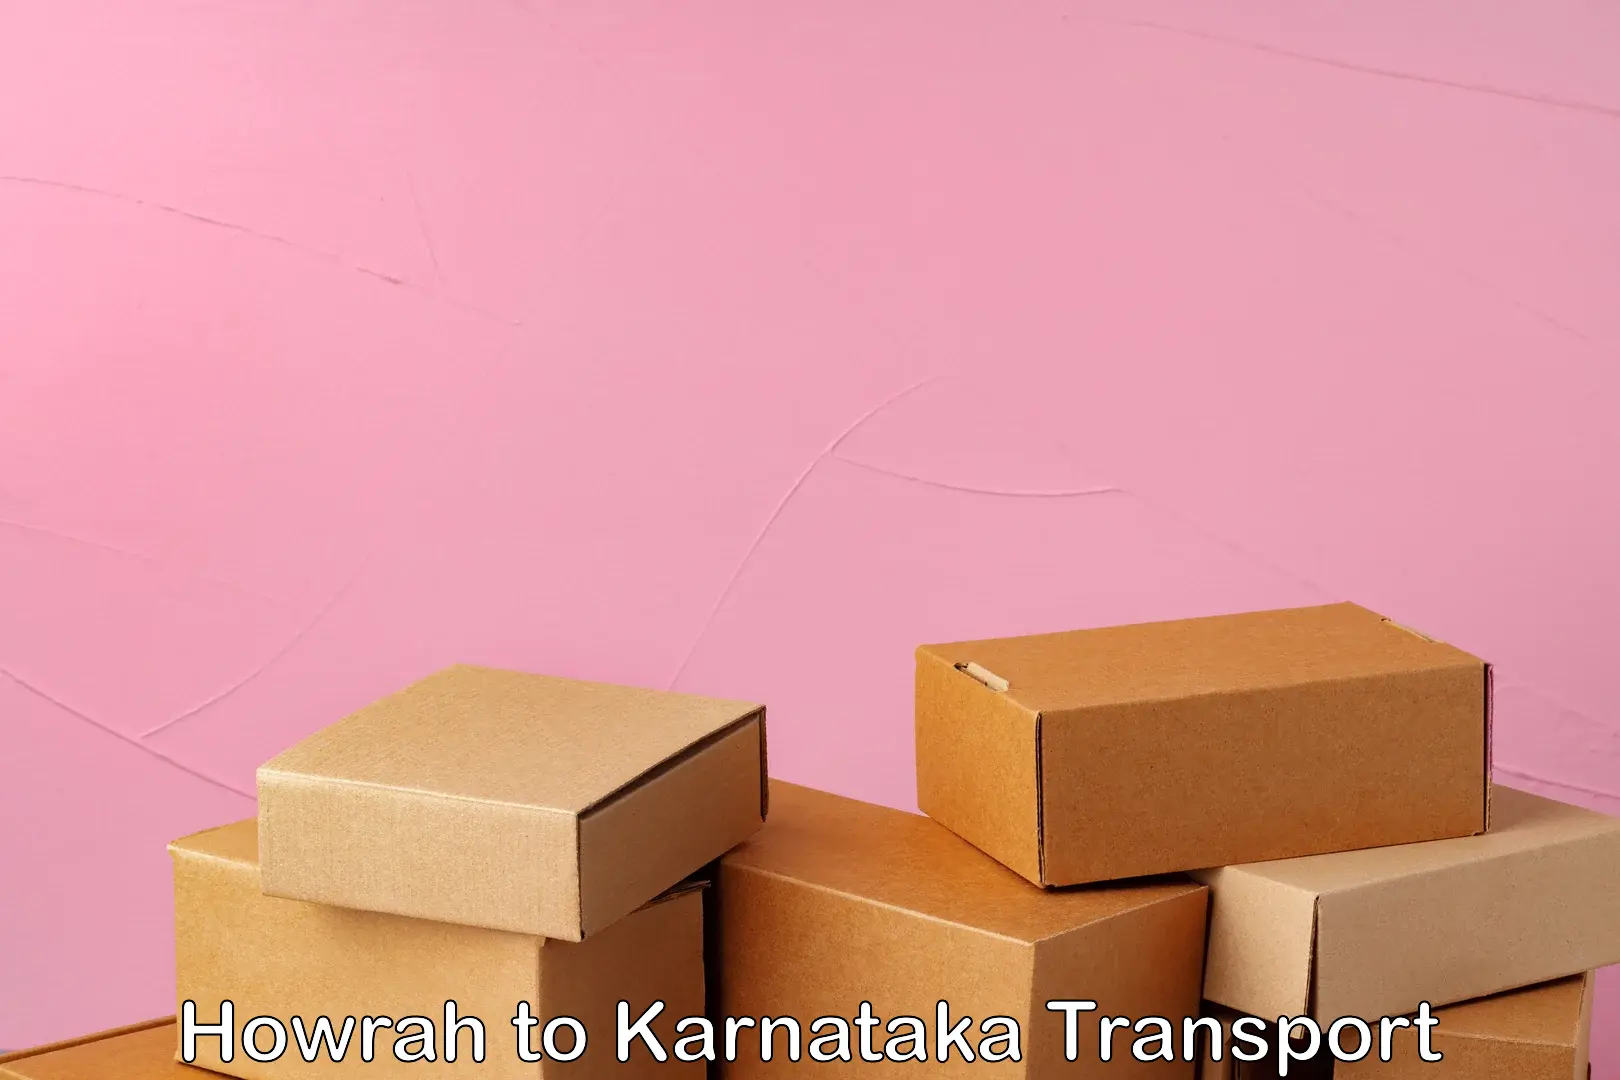 Shipping partner Howrah to Karnataka